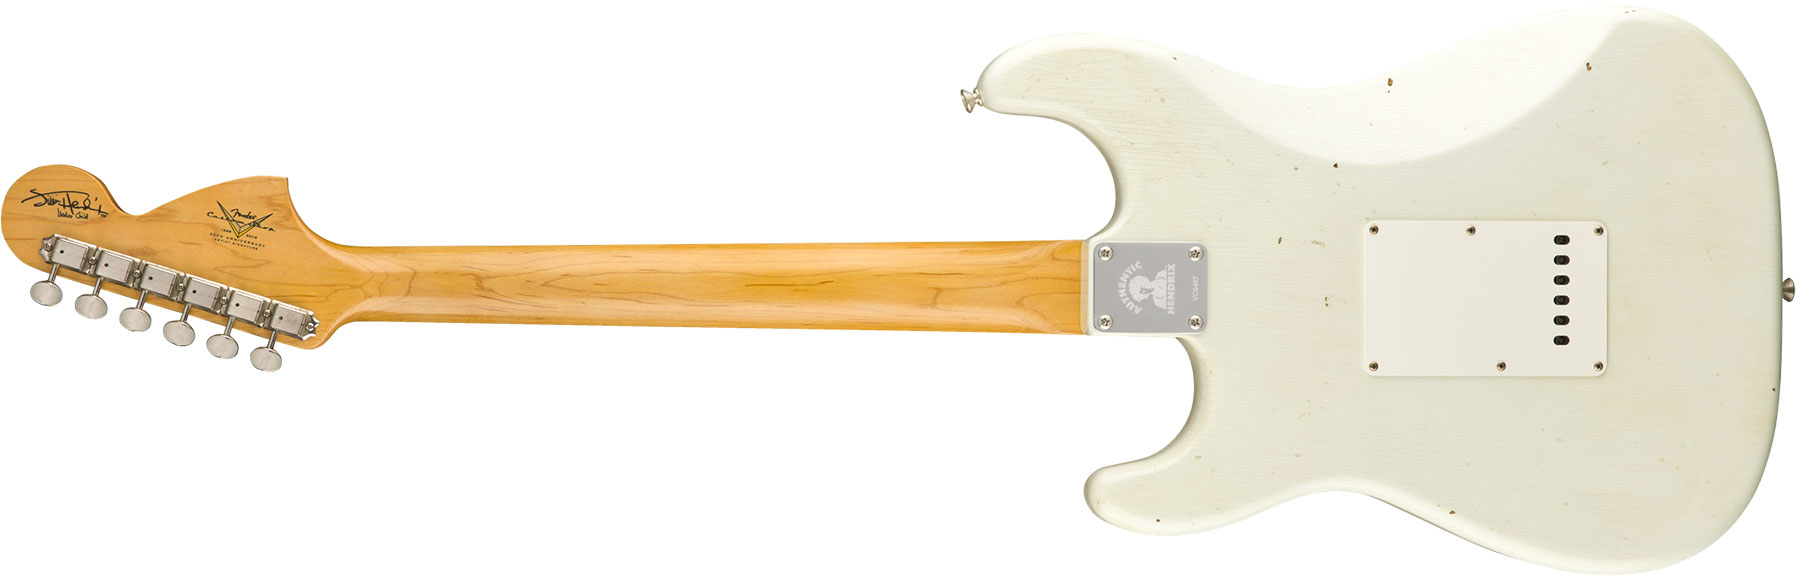 Fender Custom Shop Jimi Hendrix Strat Voodoo Child Signature 2018 Mn - Journeyman Relic Olympic White - E-Gitarre in Str-Form - Variation 1